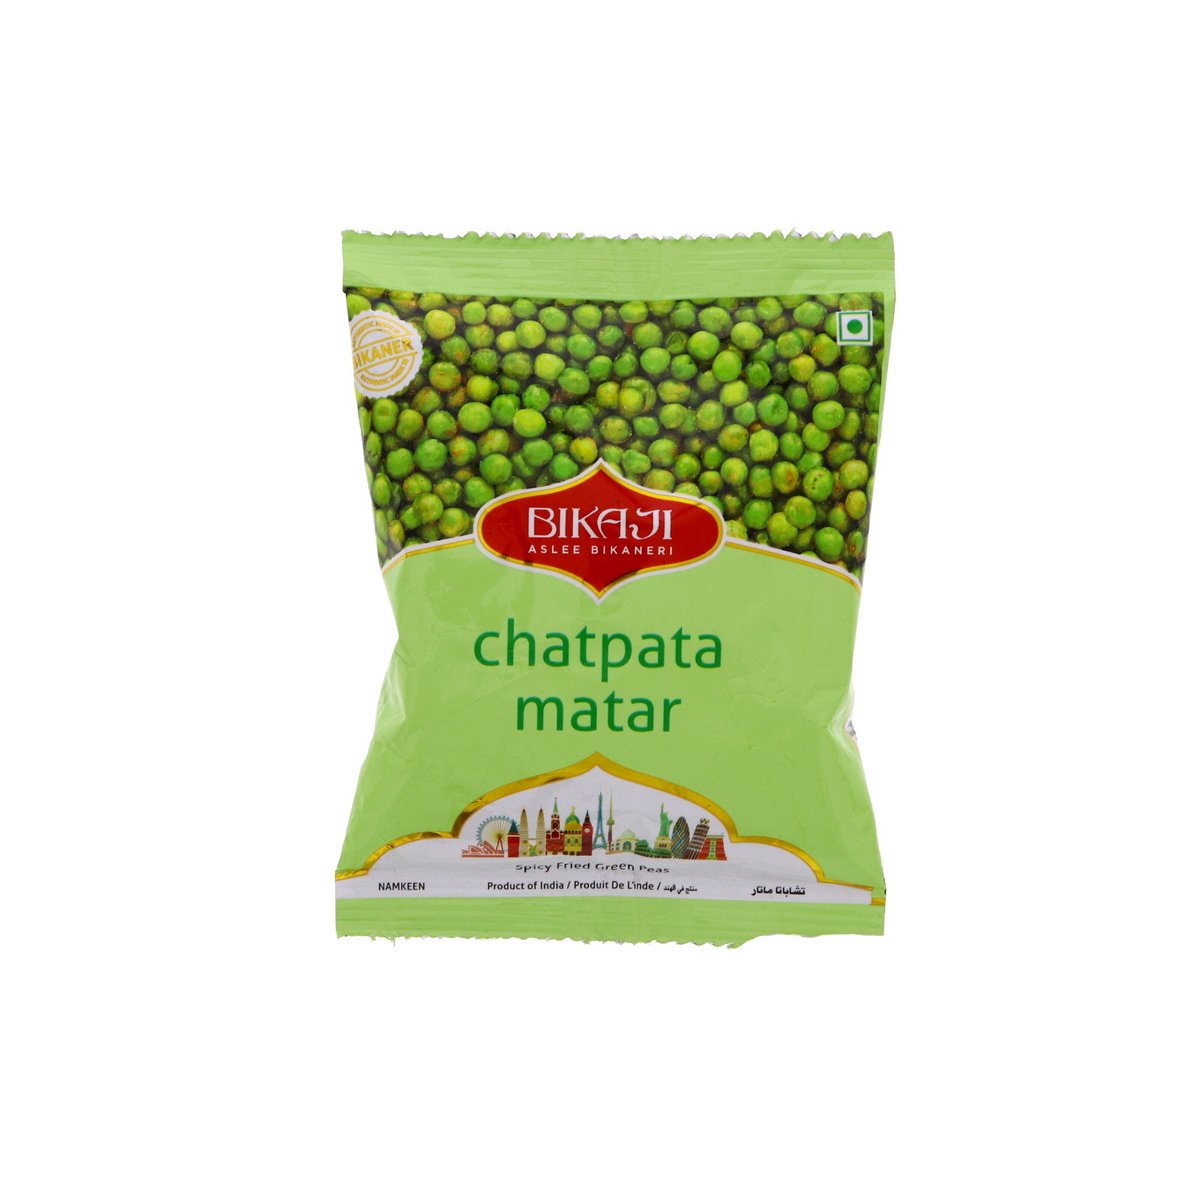 Bikaji Chatpata Matar Namkeen 40 g